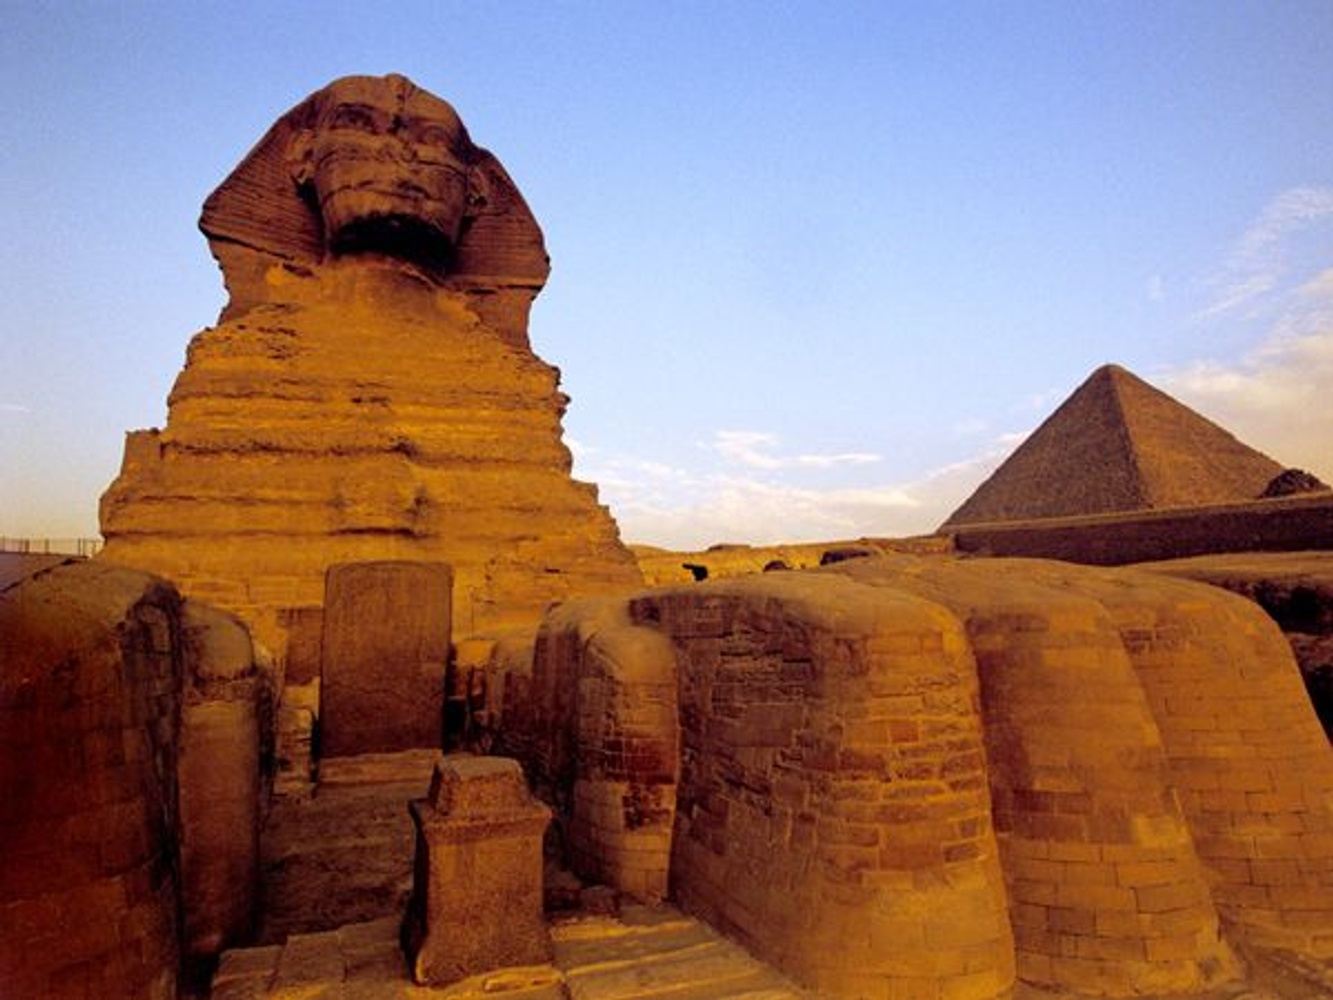 The Giza Pyramids and the Sphinx